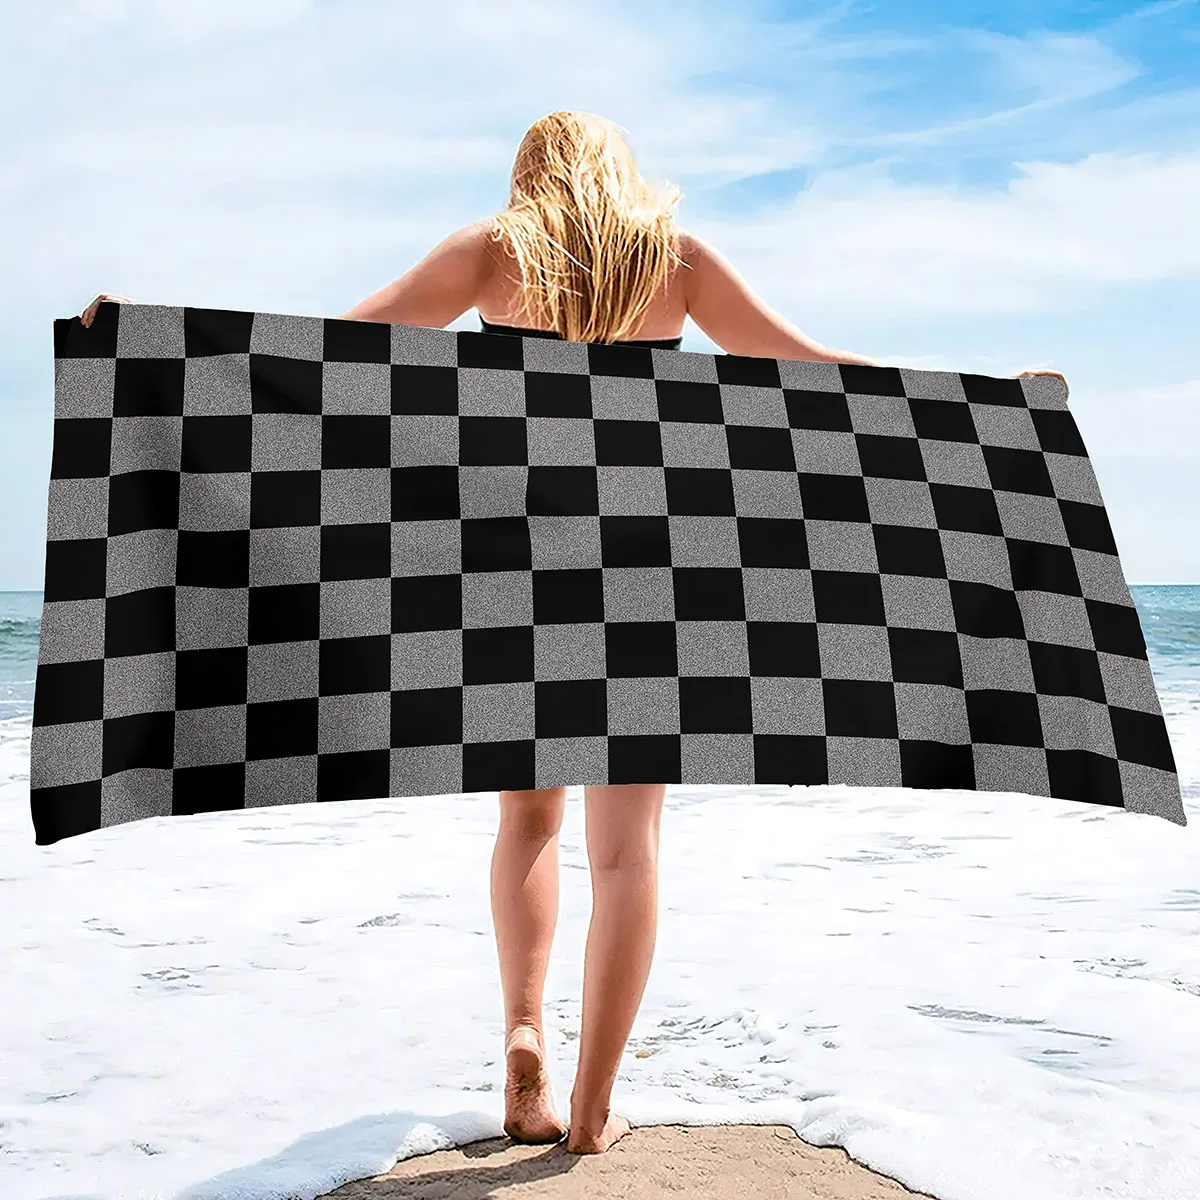 

Black White Race Checkered Flag Microfiber Beach Towels Oversized Sand Free Quick Dry Beach Towel Bath Towel for Women Men